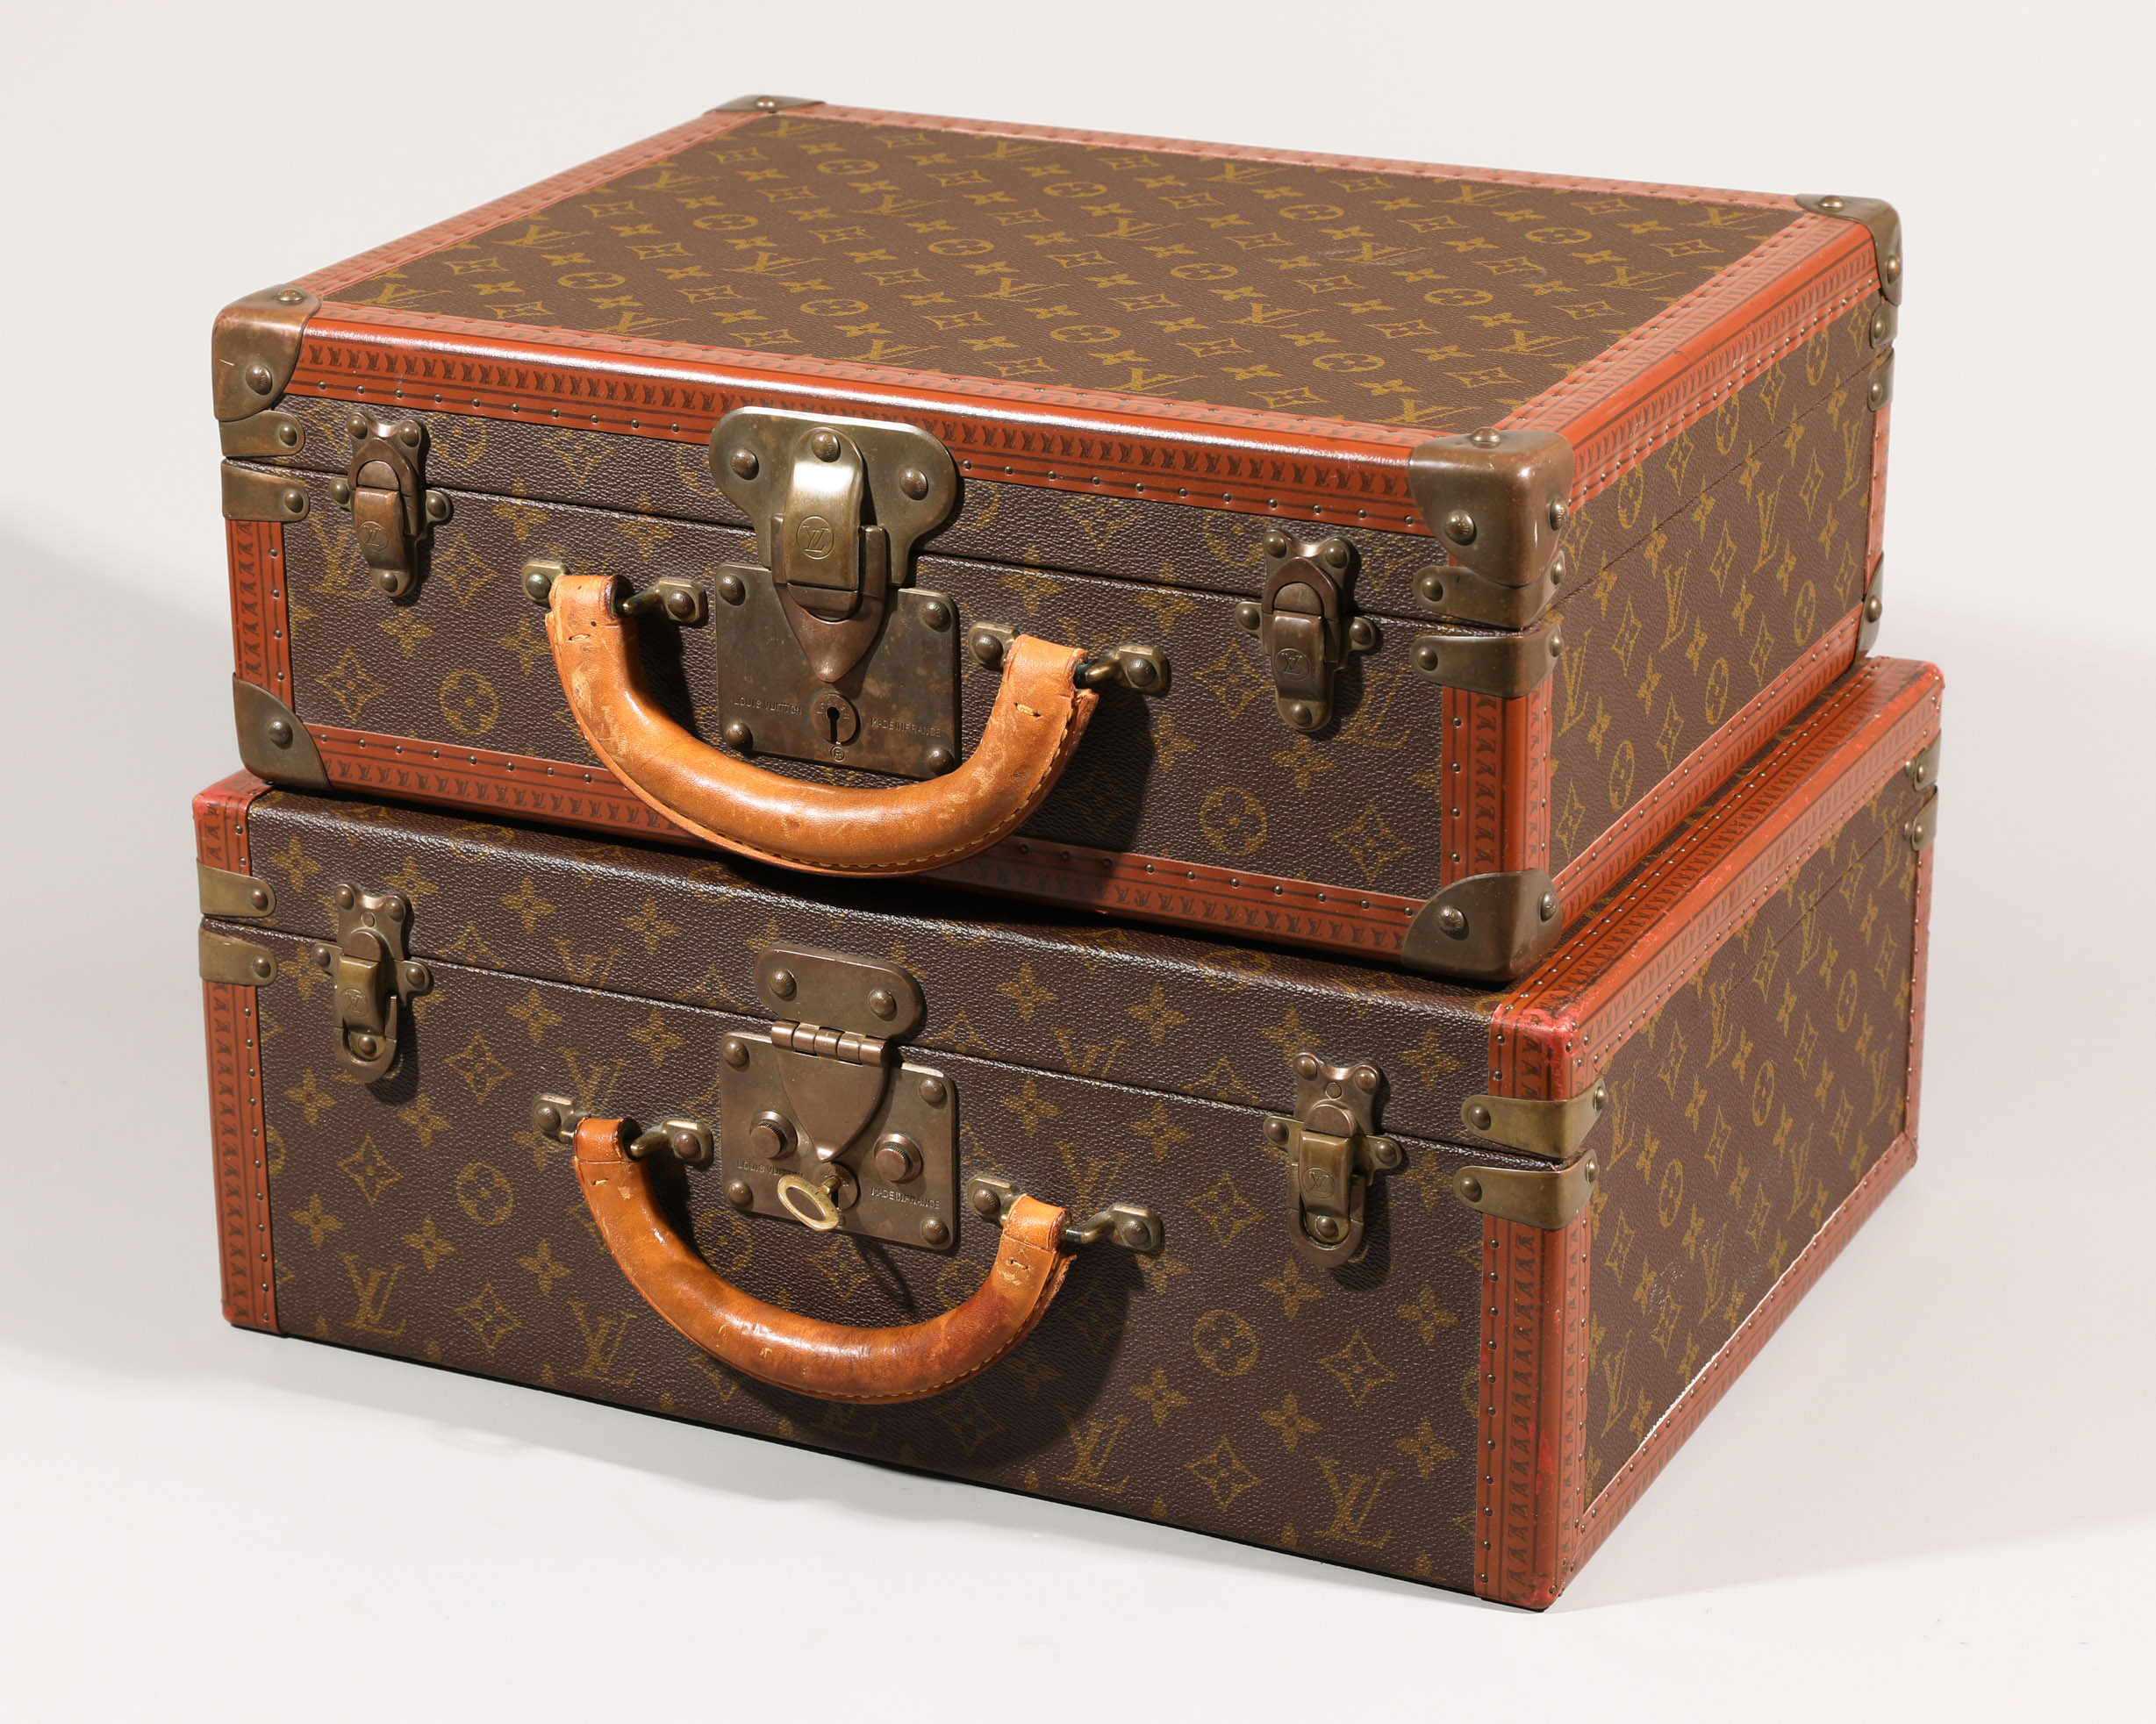 2 Louis Vuitton Suitcases, Model Rigid Alzer - Image 2 of 6